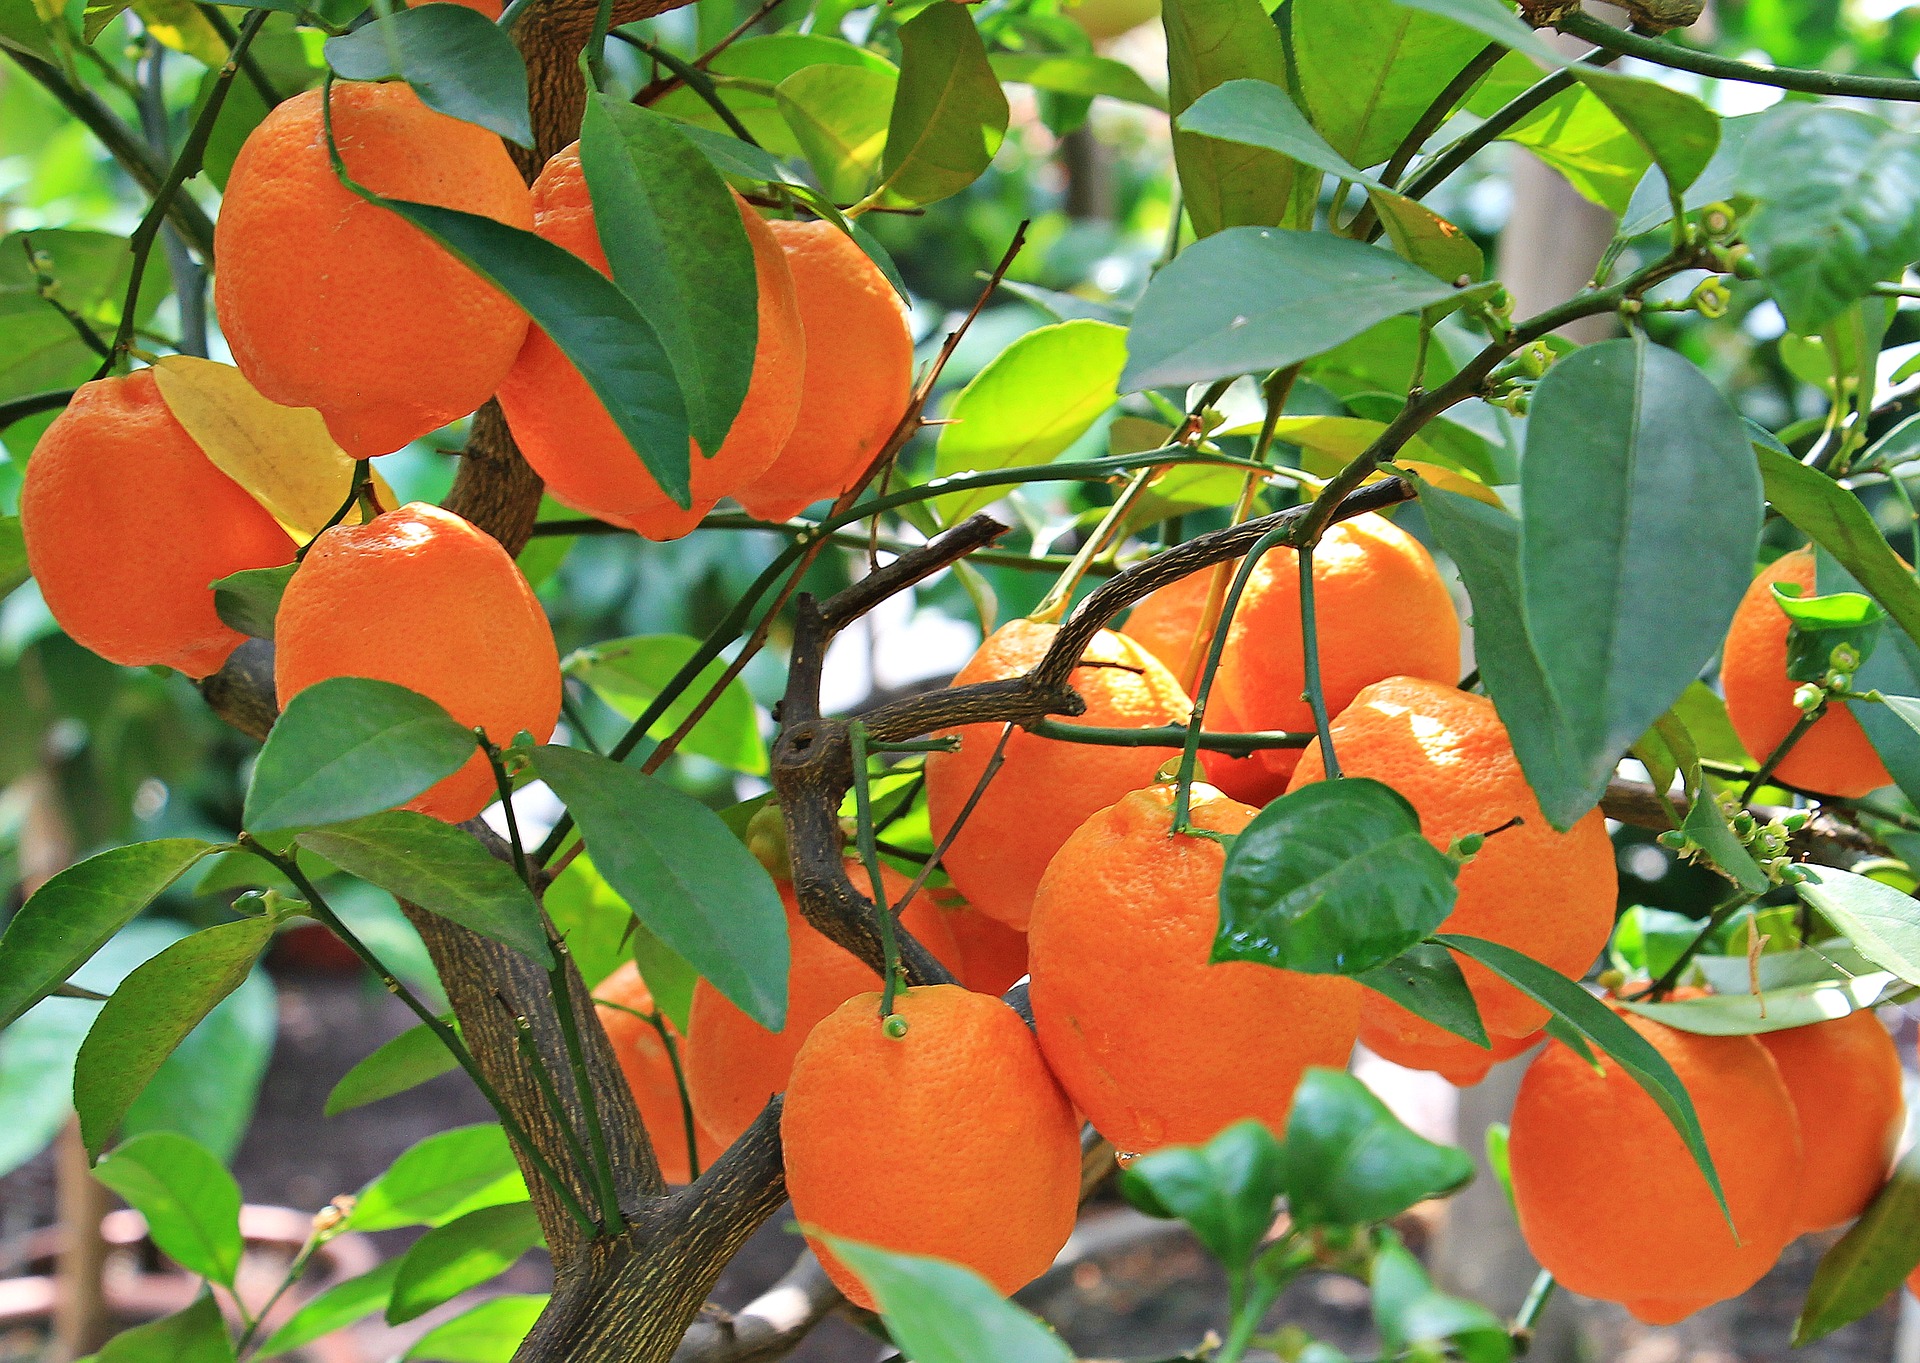 Fresh oranges photo